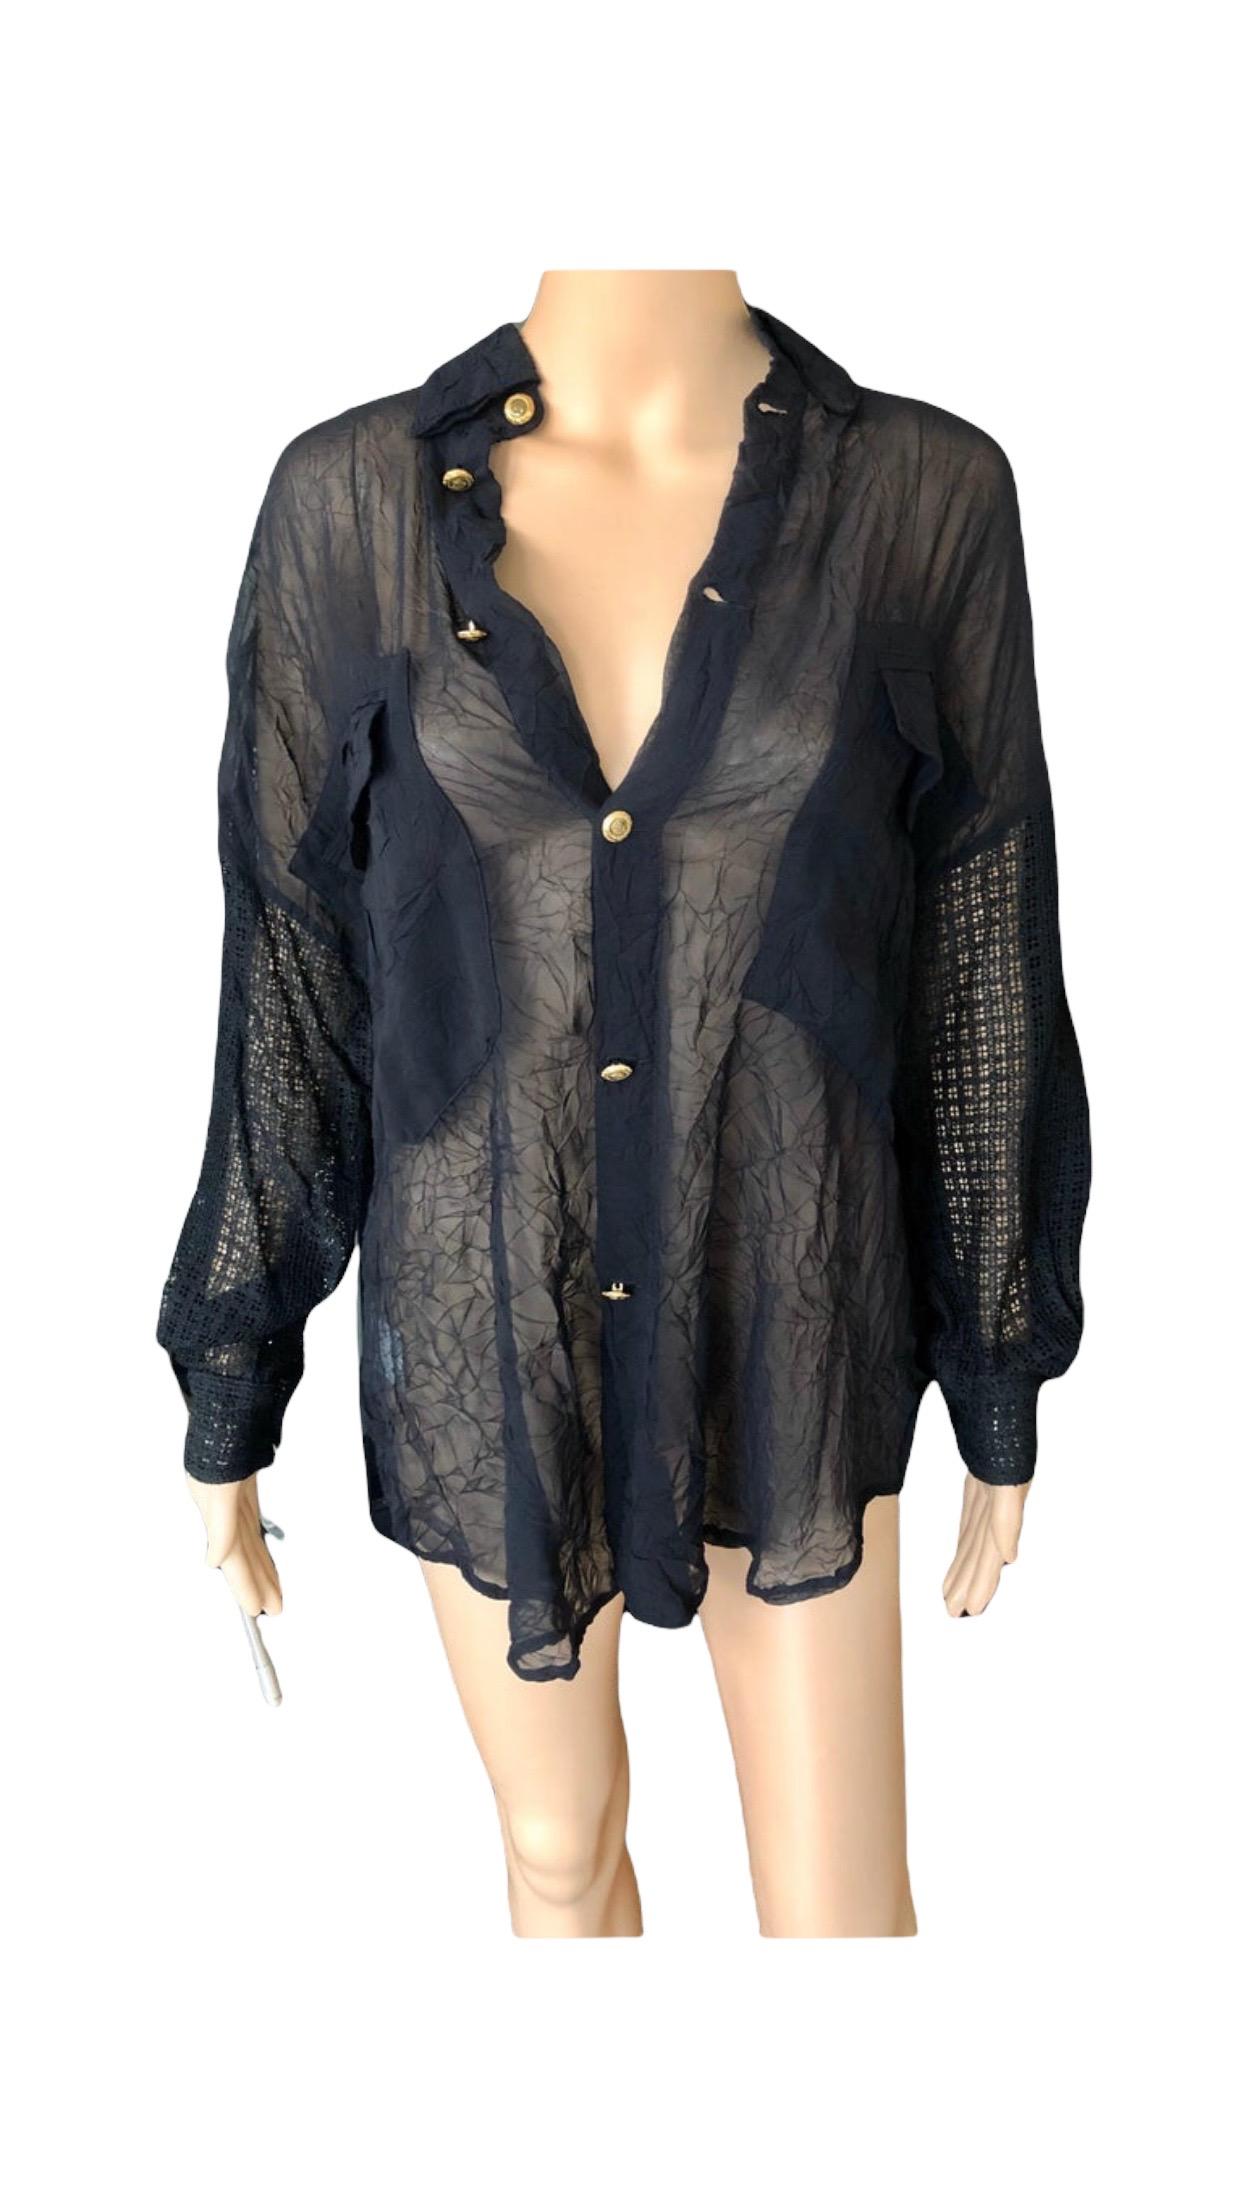 Gianni Versace c. 1990 Vintage Sheer Silk Mesh Black Shirt Blouse Top For Sale 6